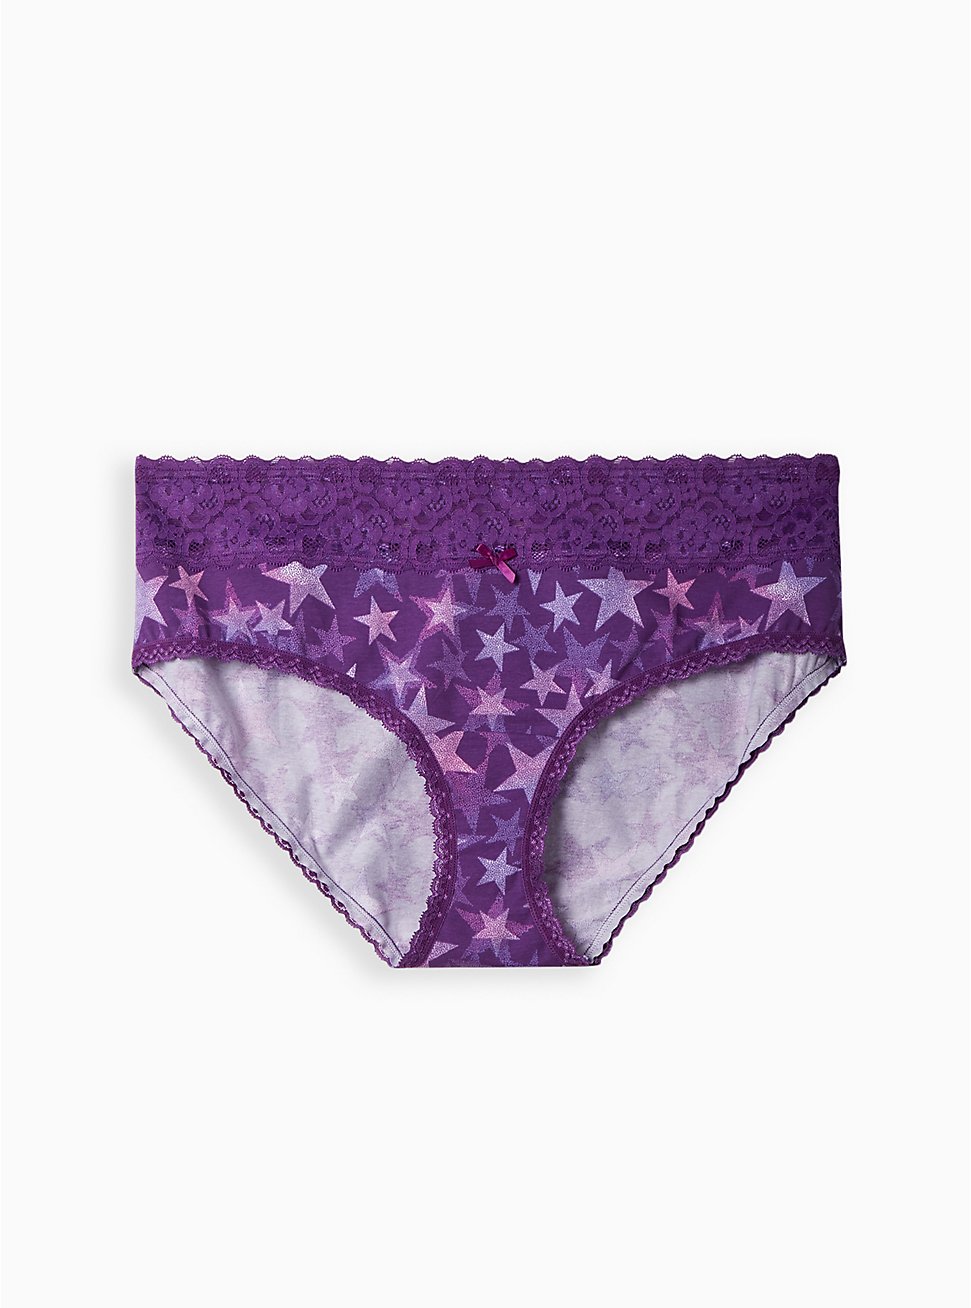 Plus Size Wide Lace Trim Hipster Panty - Cotton Stars Purple, DOTTED STARS PURPLE, hi-res